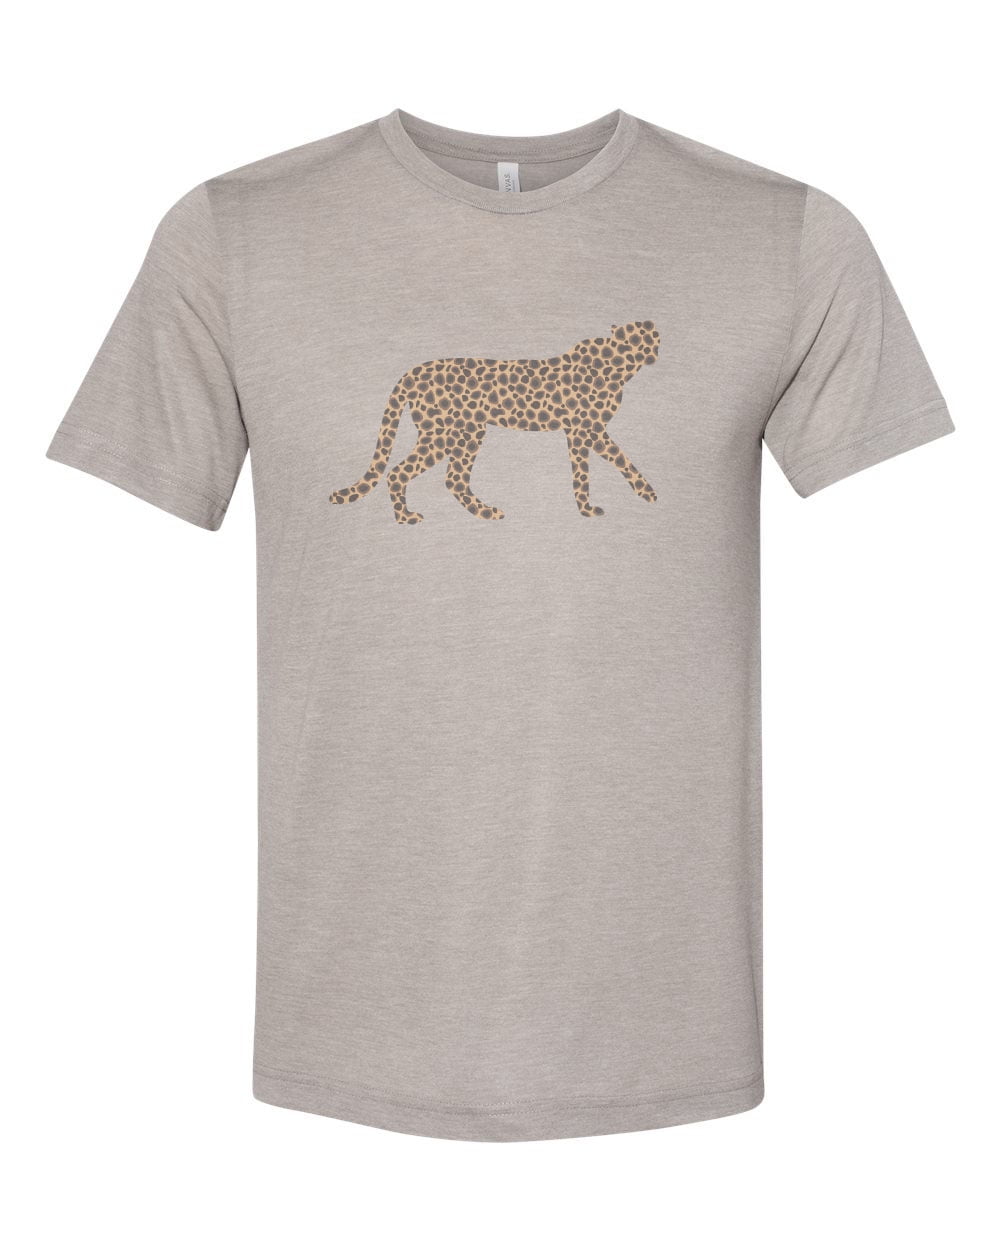 Cheetahs Make Me Happy Sunset Retro Shirt  Cheetah Shirt  Cheetah Gifts  Gift for Cheetah Lovers  Cheetah Design  Tank Top  Hoodie